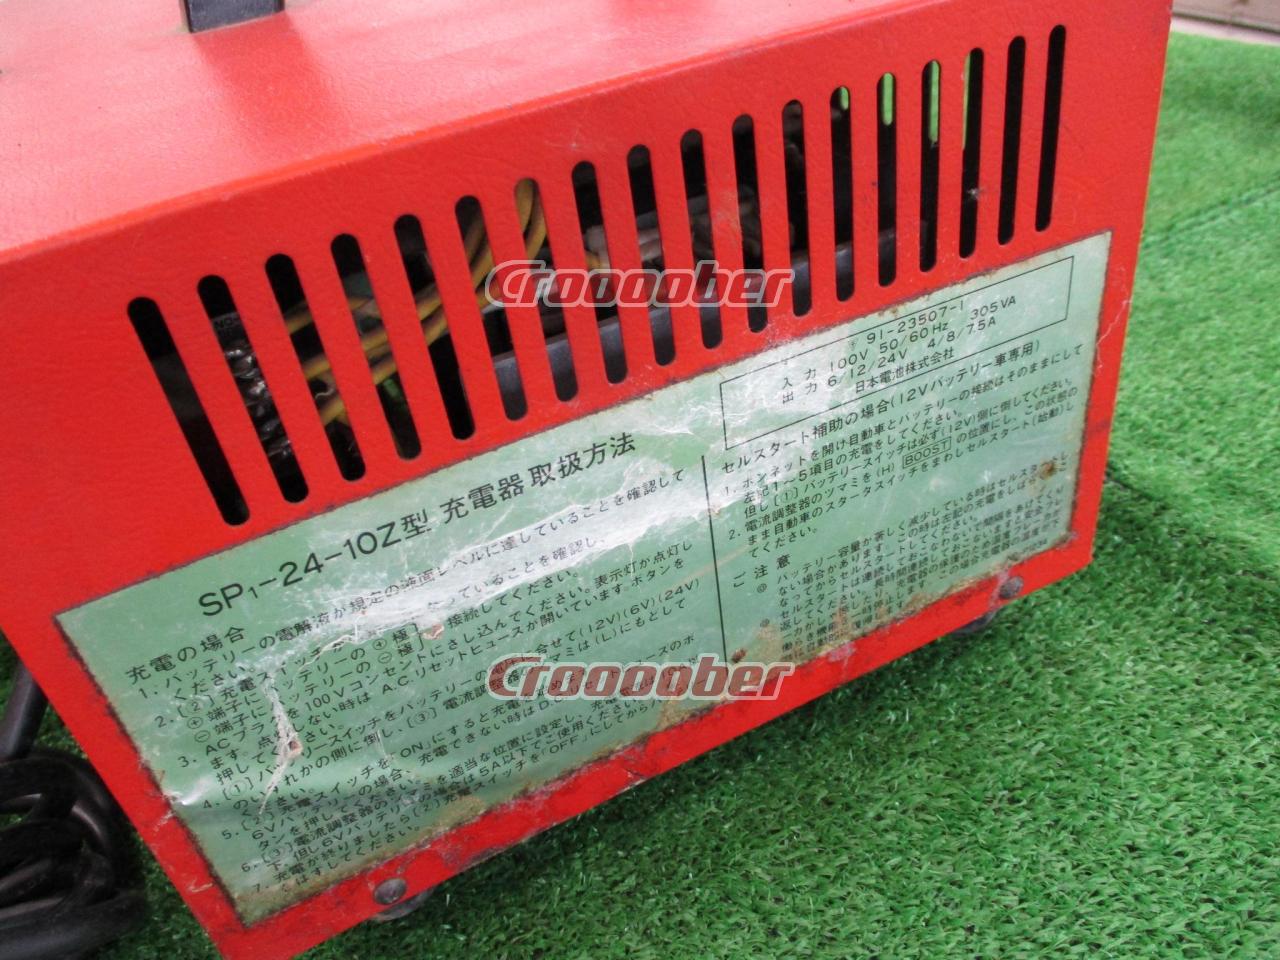 GS Yuasa Nippon SP1-24-10Z Battery Charger | その他 | Croooober